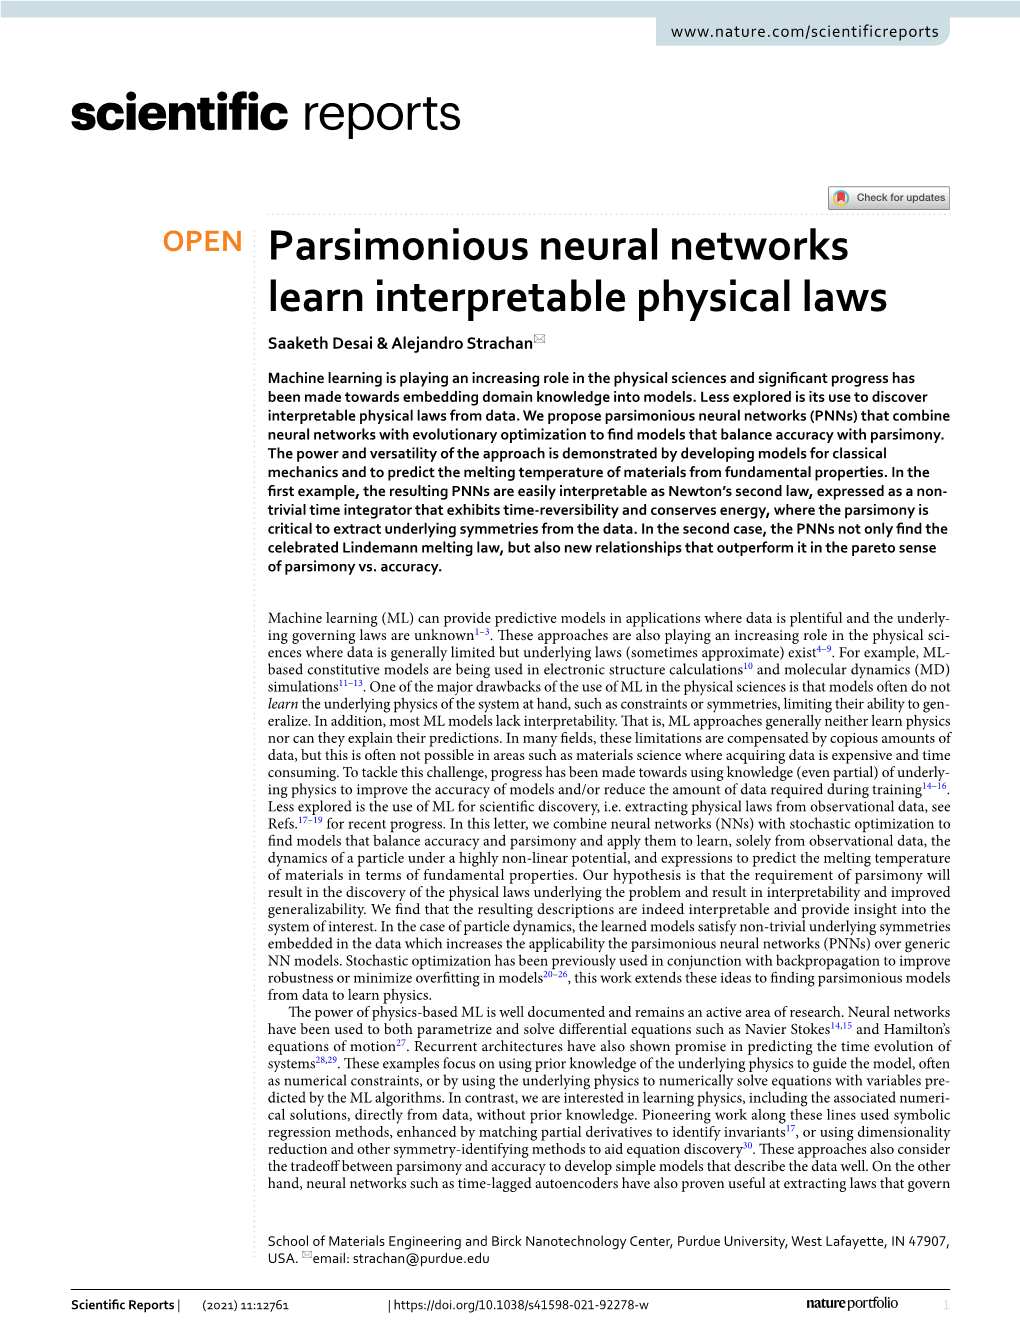 Parsimonious Neural Networks Learn Interpretable Physical Laws Saaketh Desai & Alejandro Strachan*